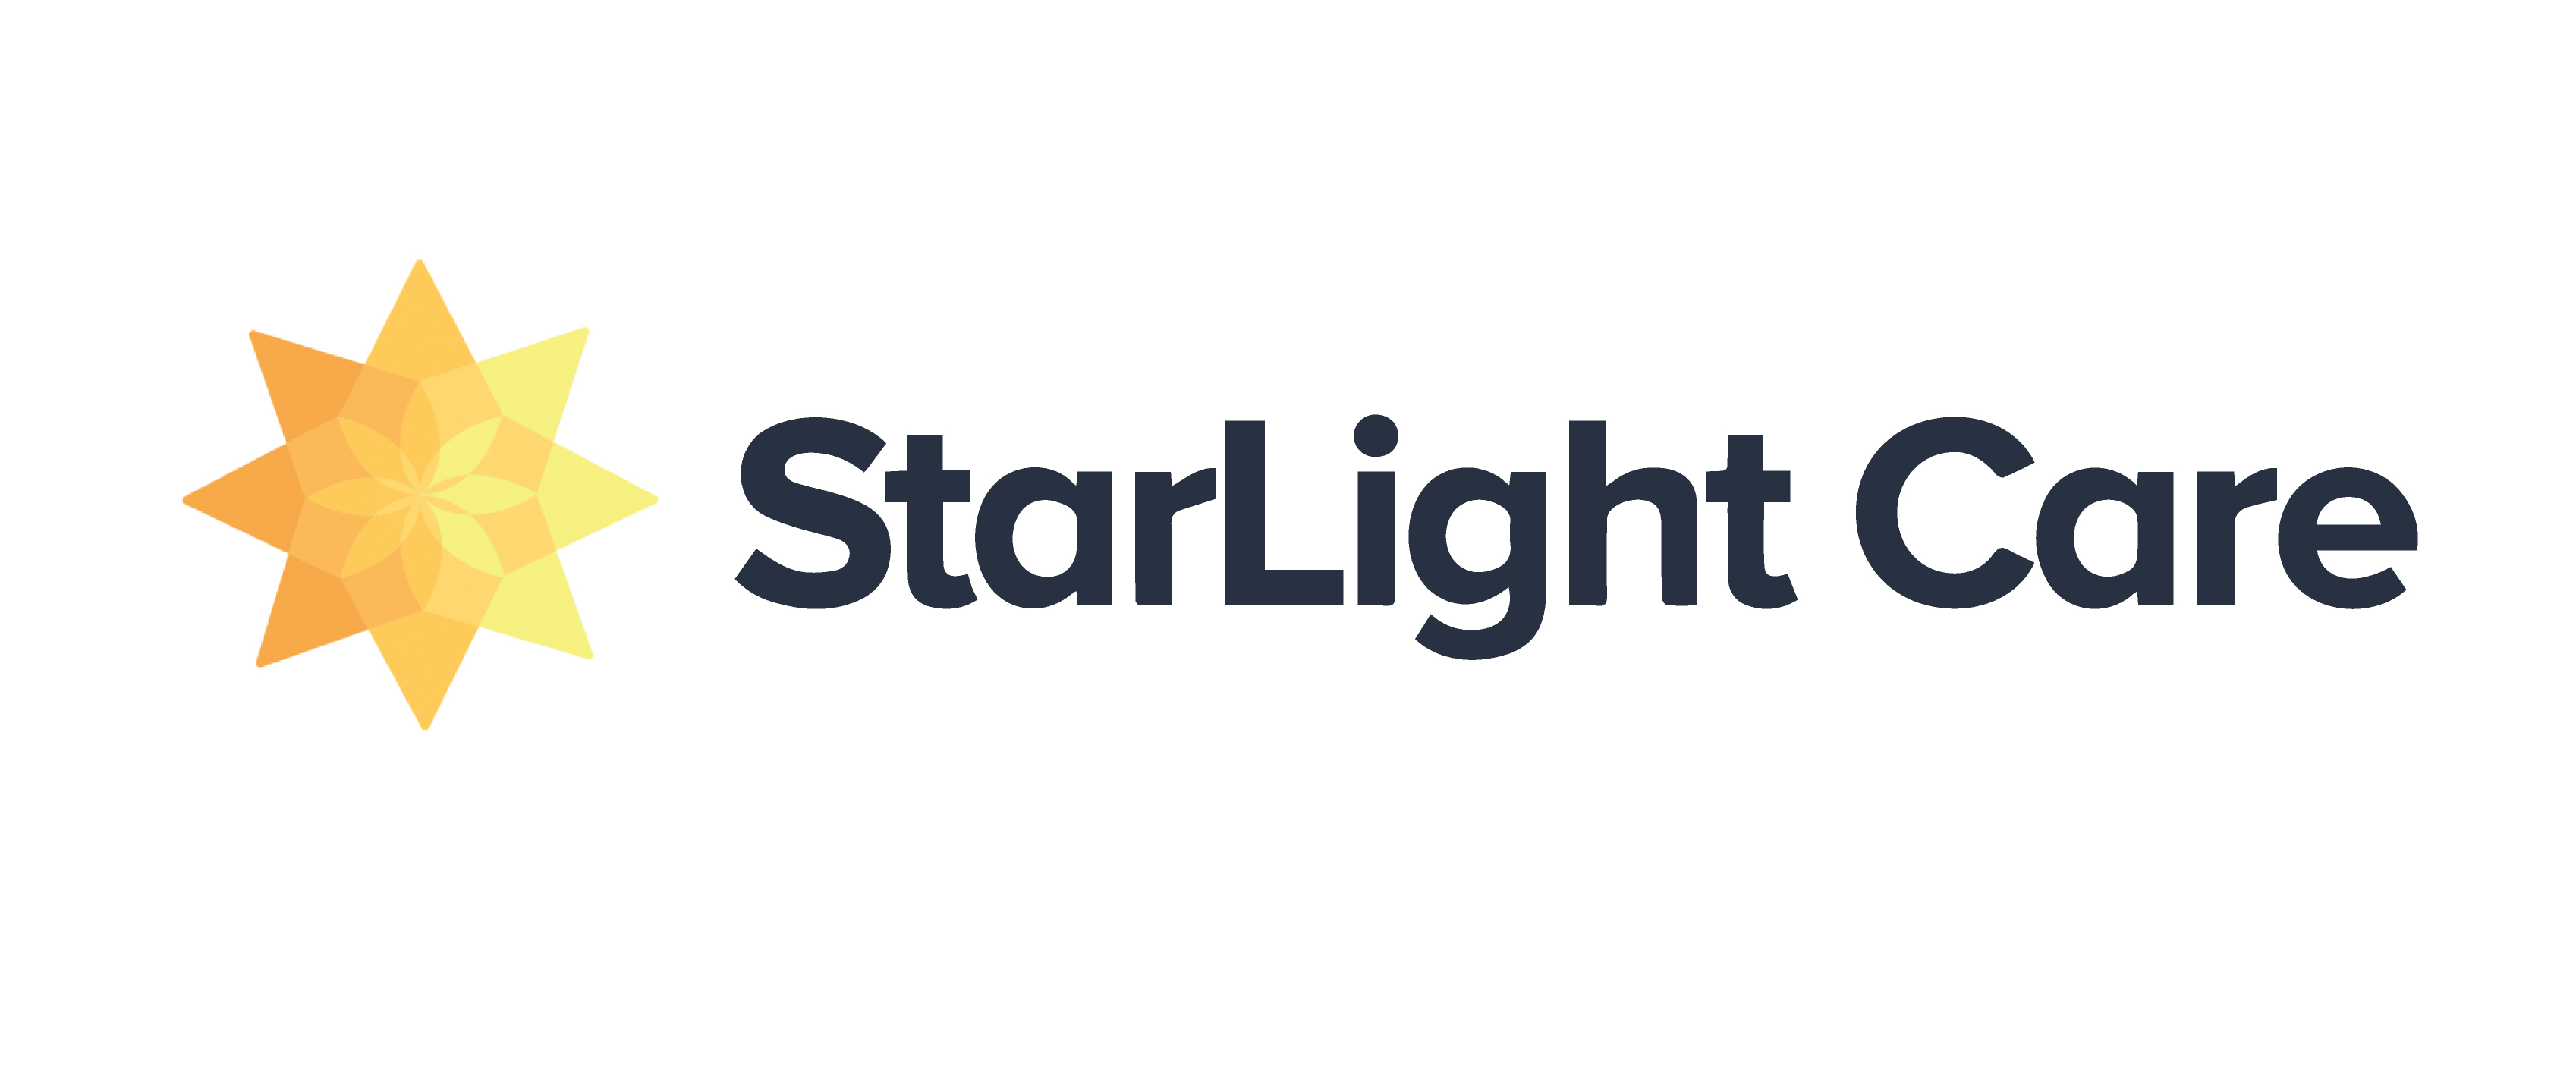 Starlight care